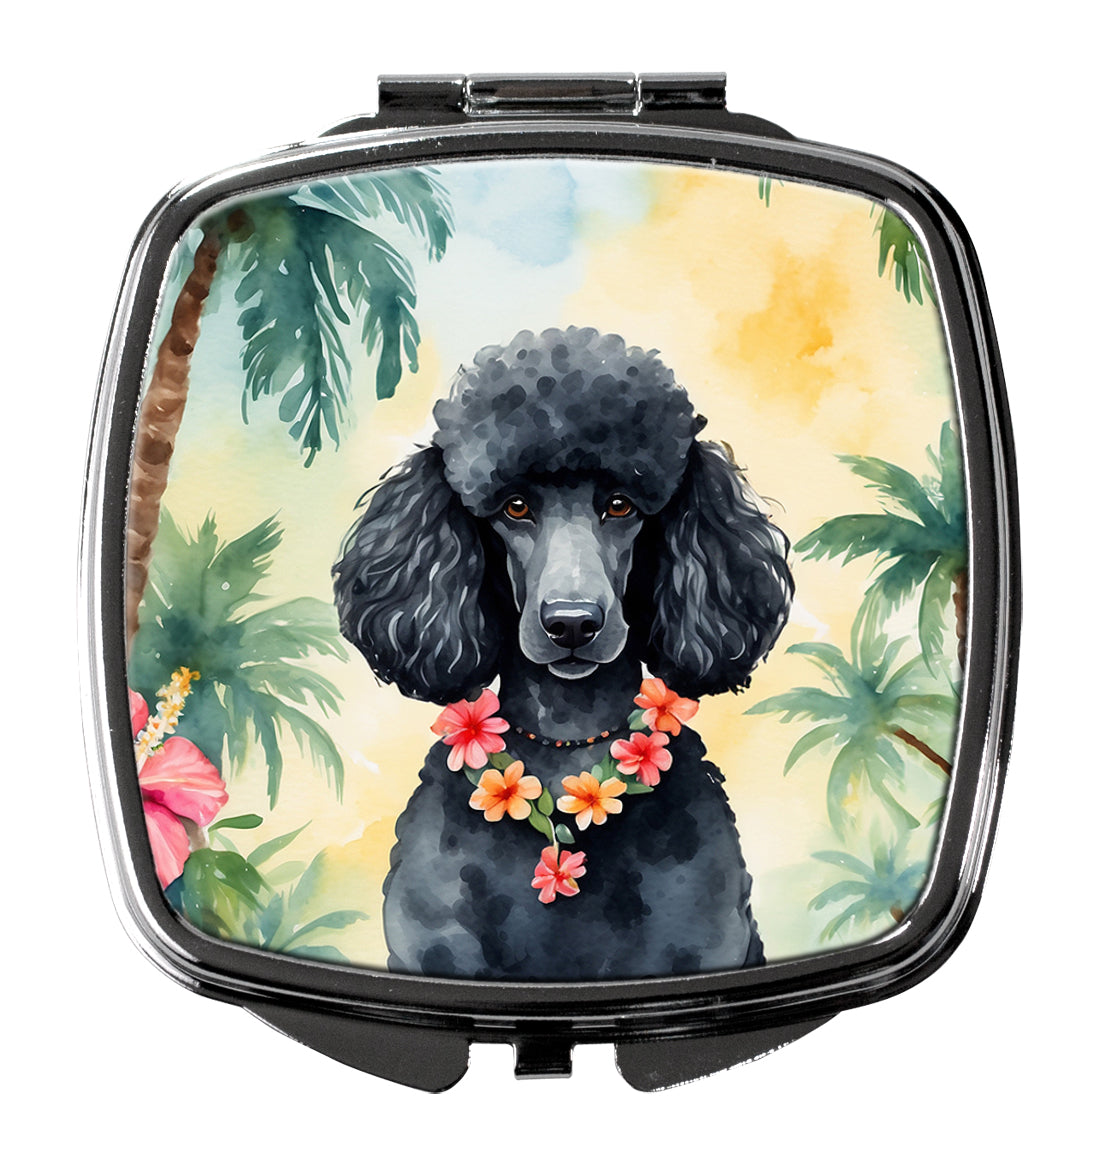 Buy this Black Poodle Luau Compact Mirror